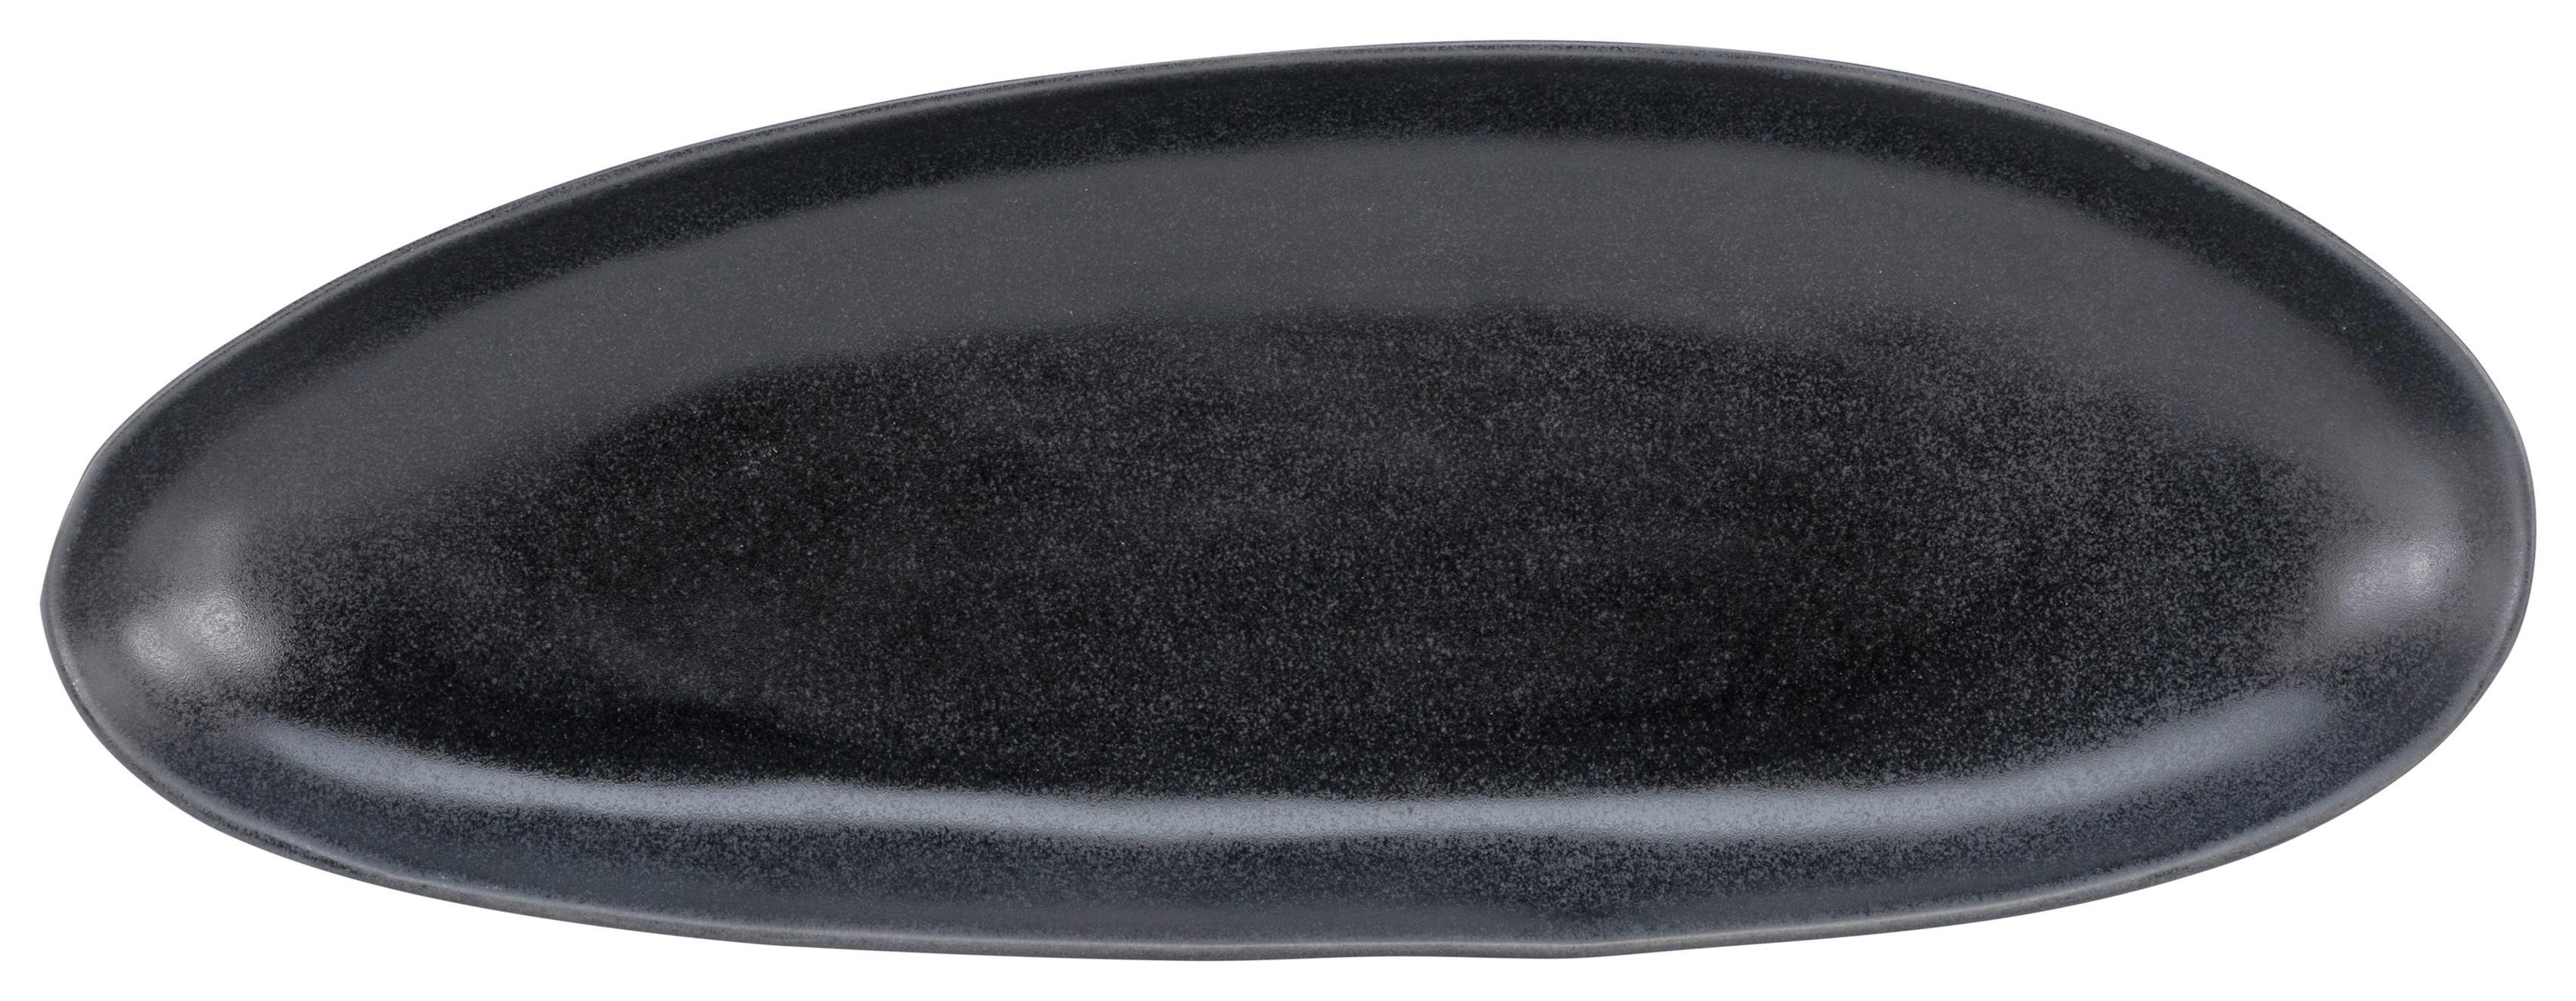 Servírovací Podnos Gourmet-M, Ø: 35cm - černá, Moderní, keramika (35,5/15/3,5cm) - Premium Living